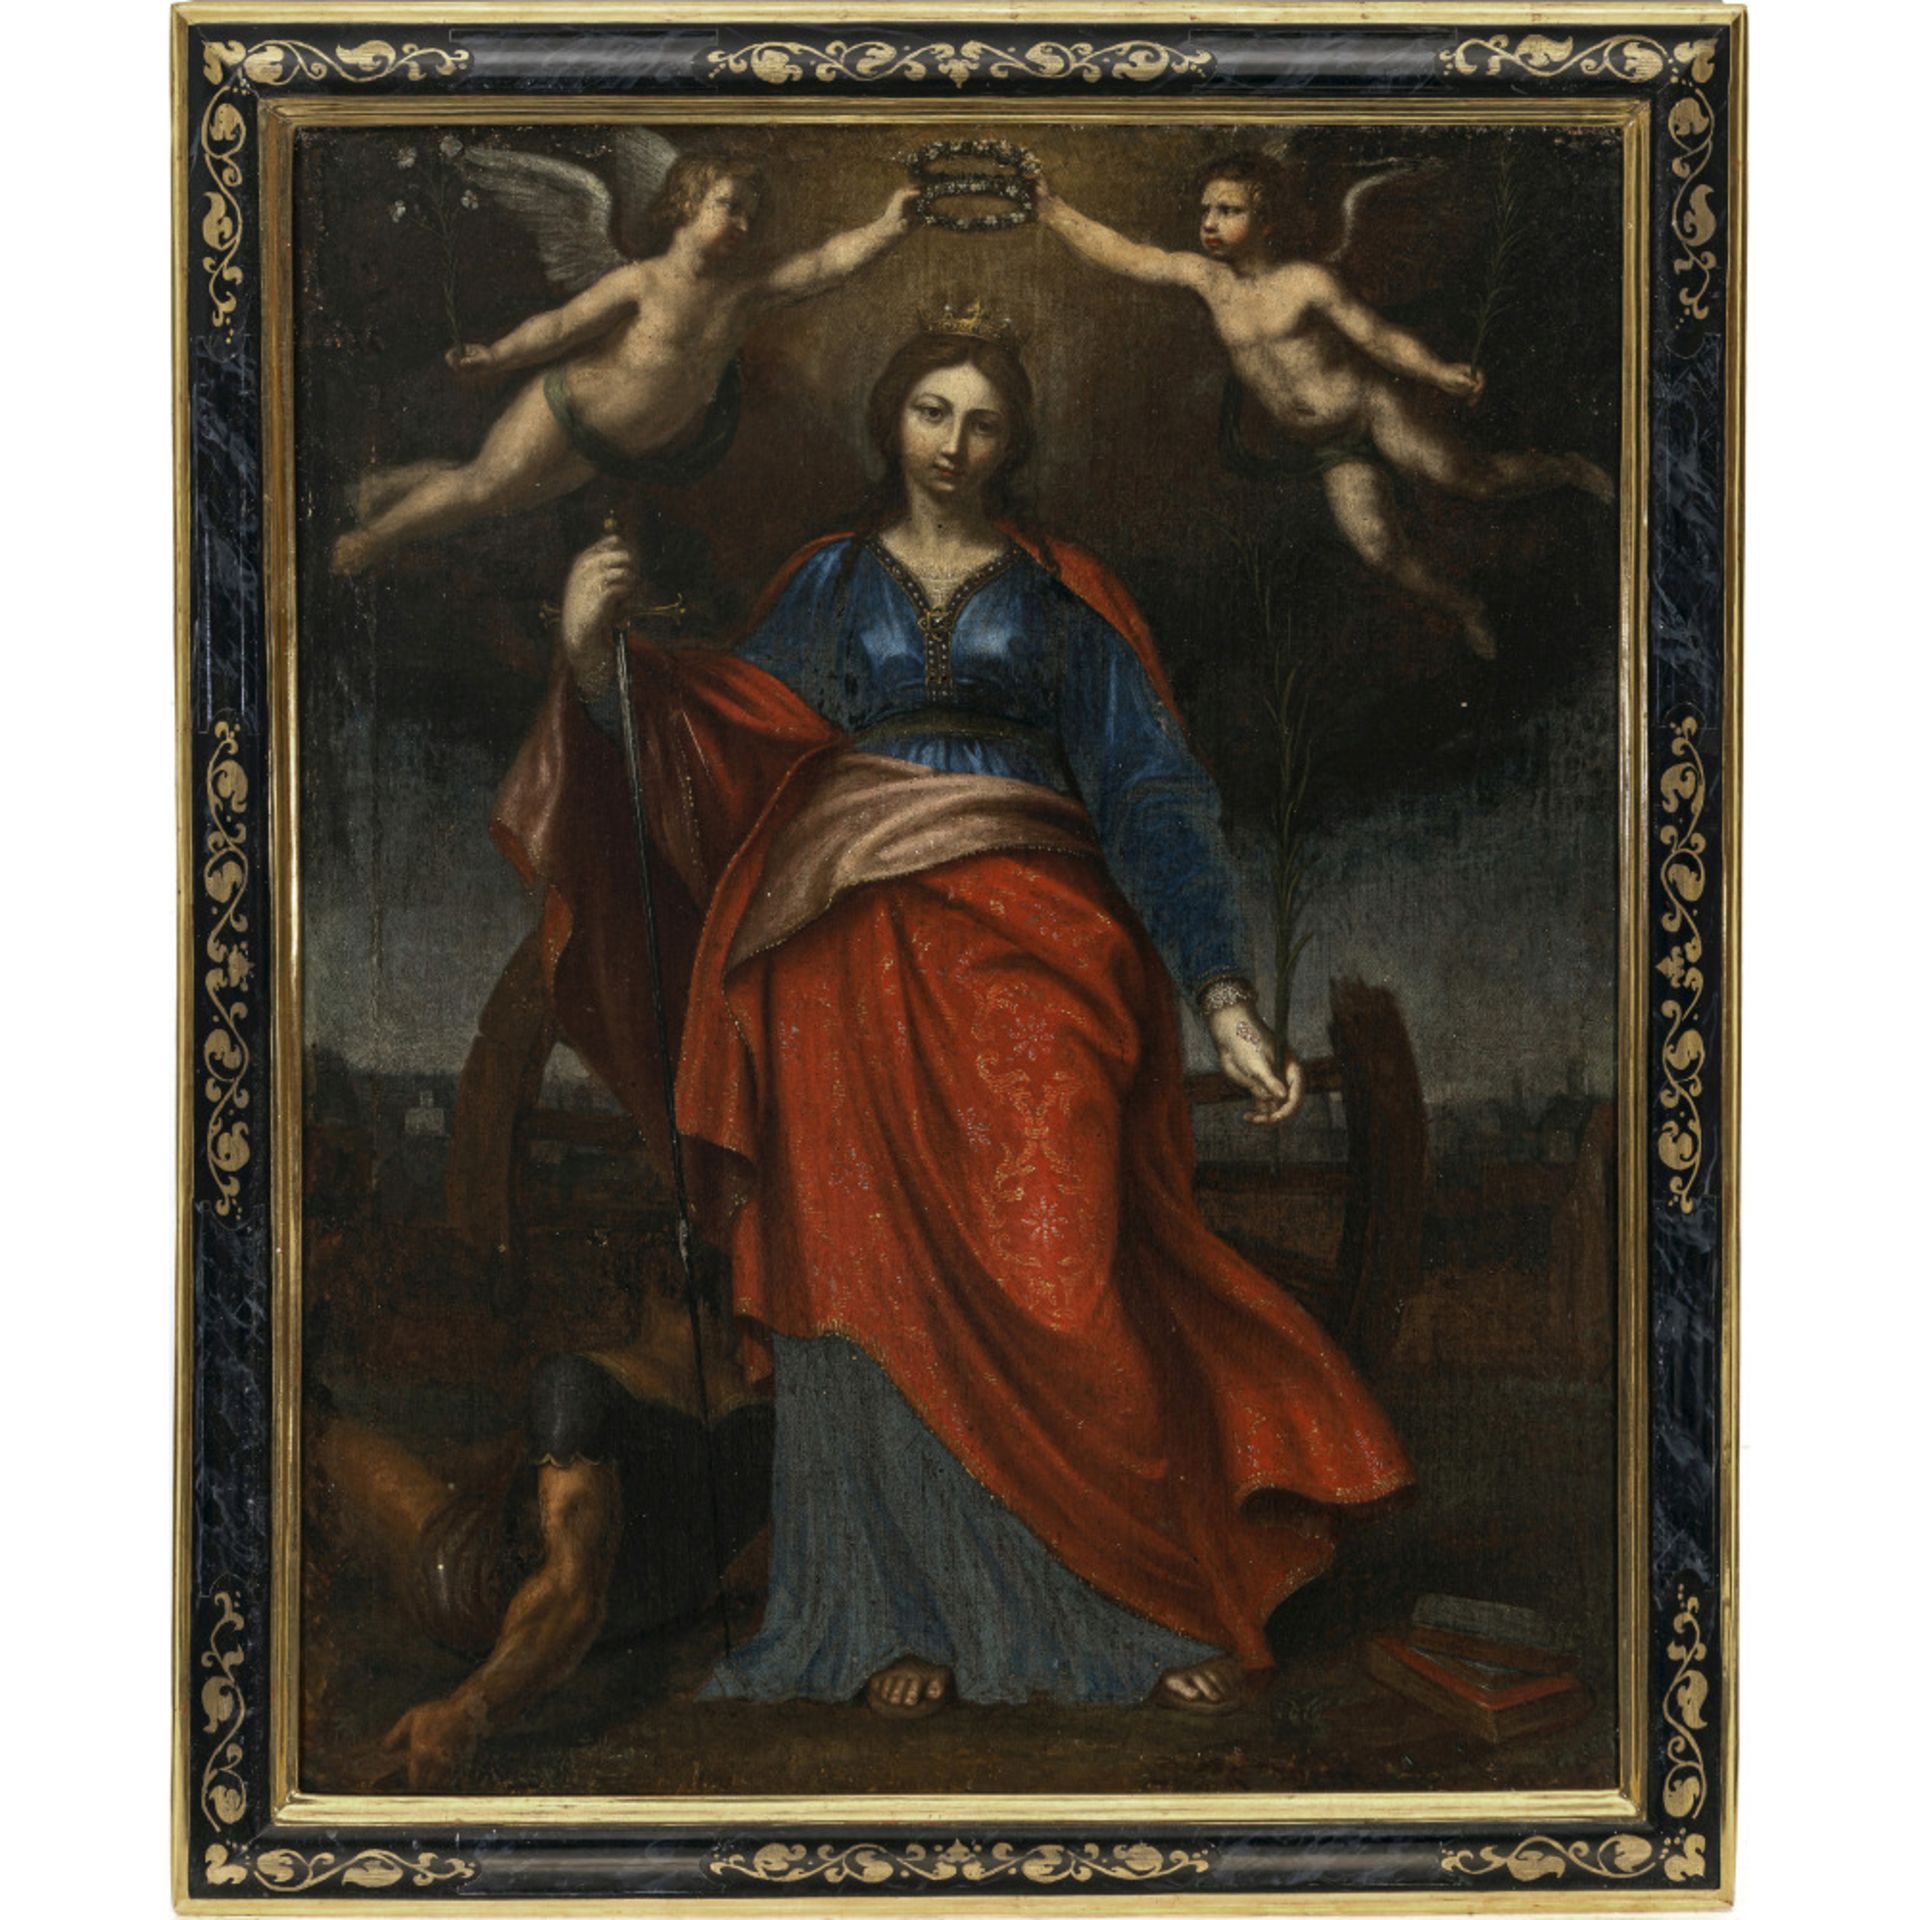 Unbekannt 18th century - Saint Catherine - Image 2 of 2